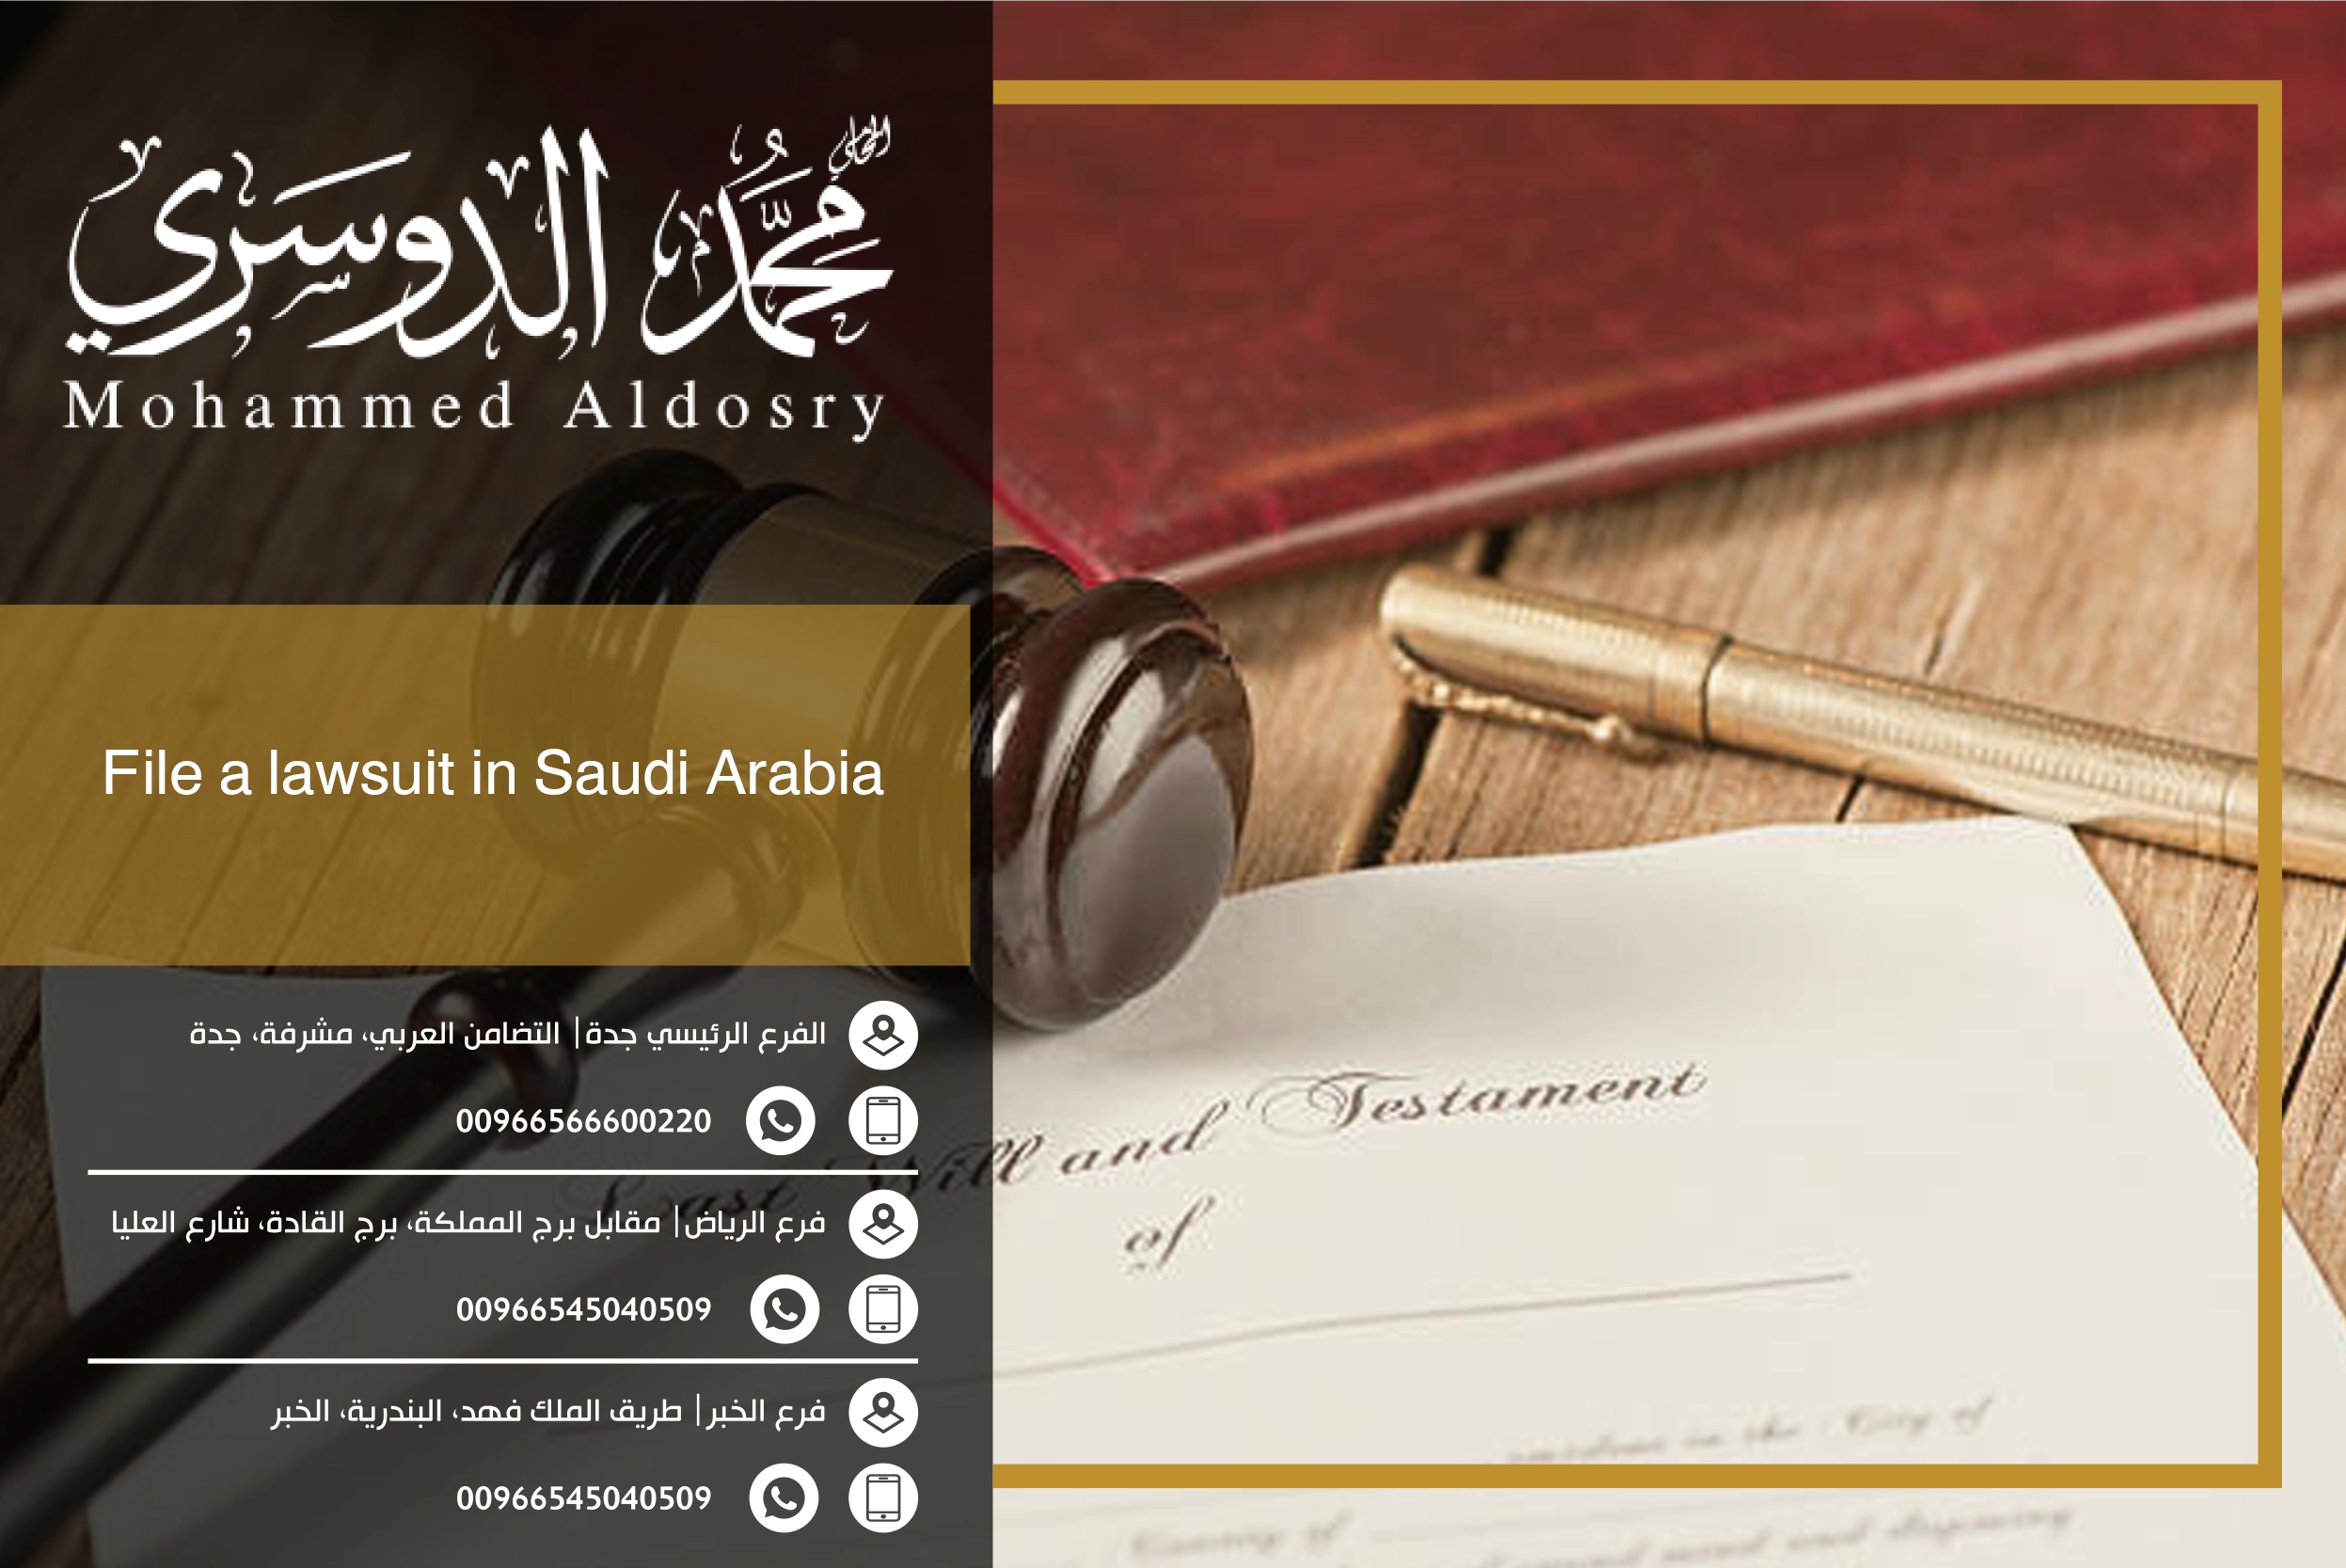 file a lawsuit in Saudi Arabia